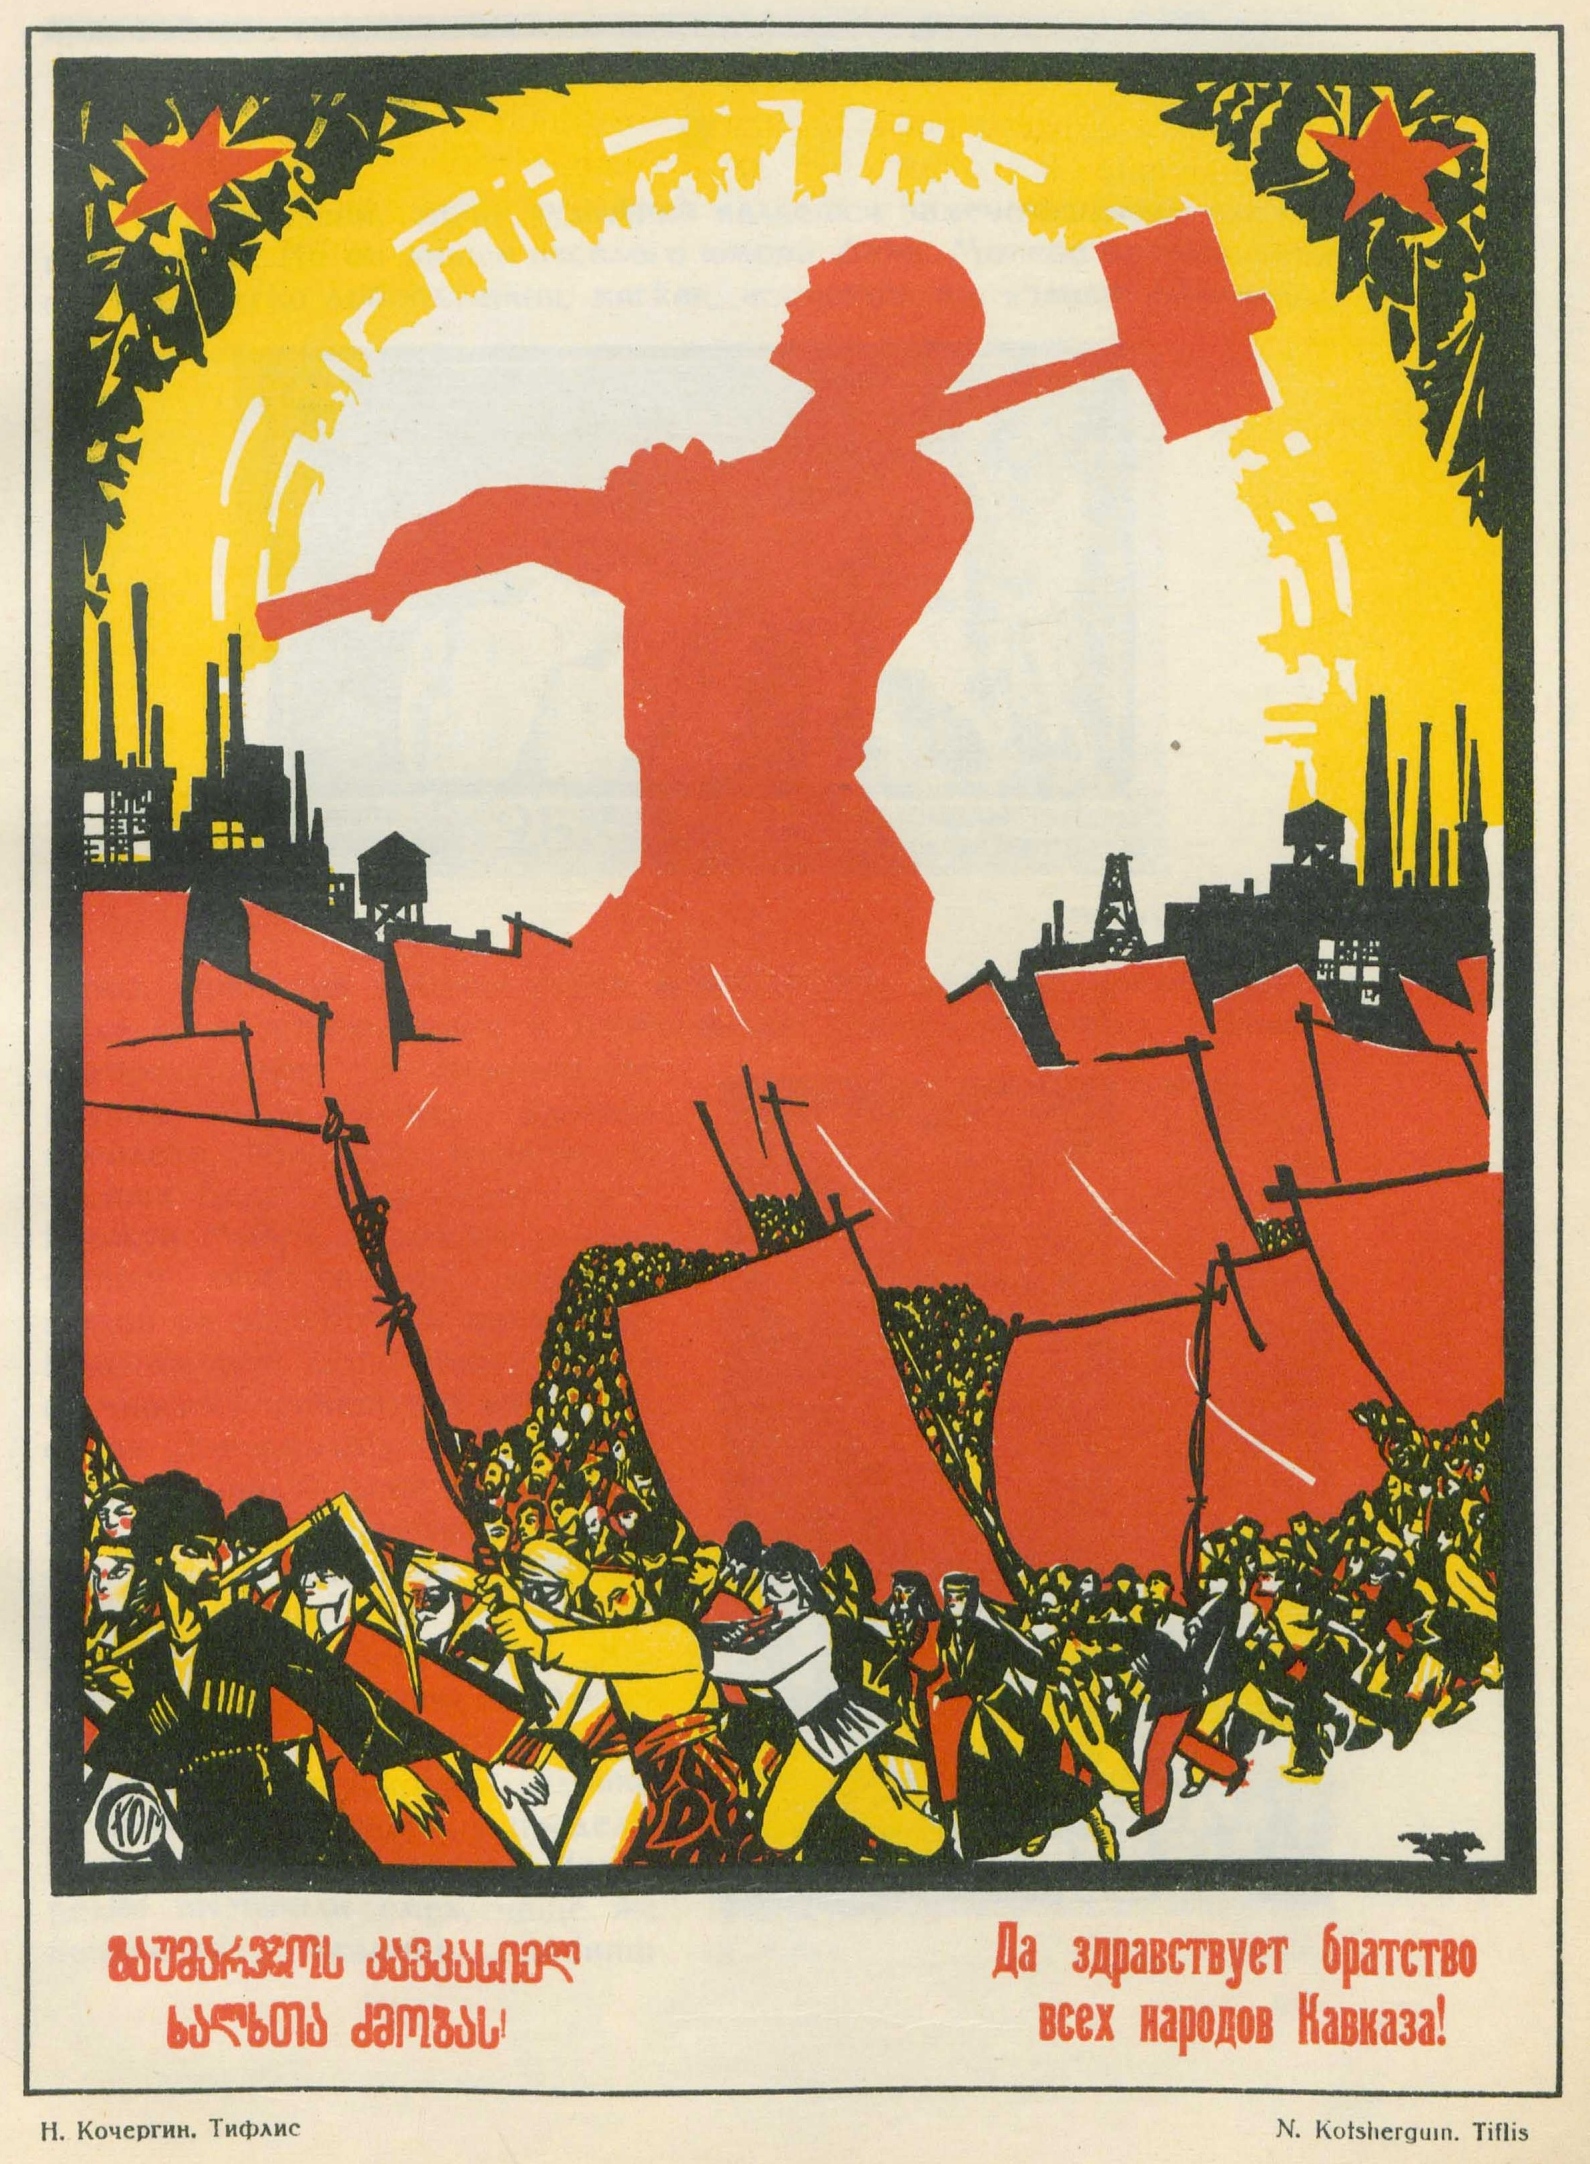 Лозунг революция будет. Революционные плакаты. Коммунистические плакаты. Советские постеры. Революционные плакаты 1917 года.